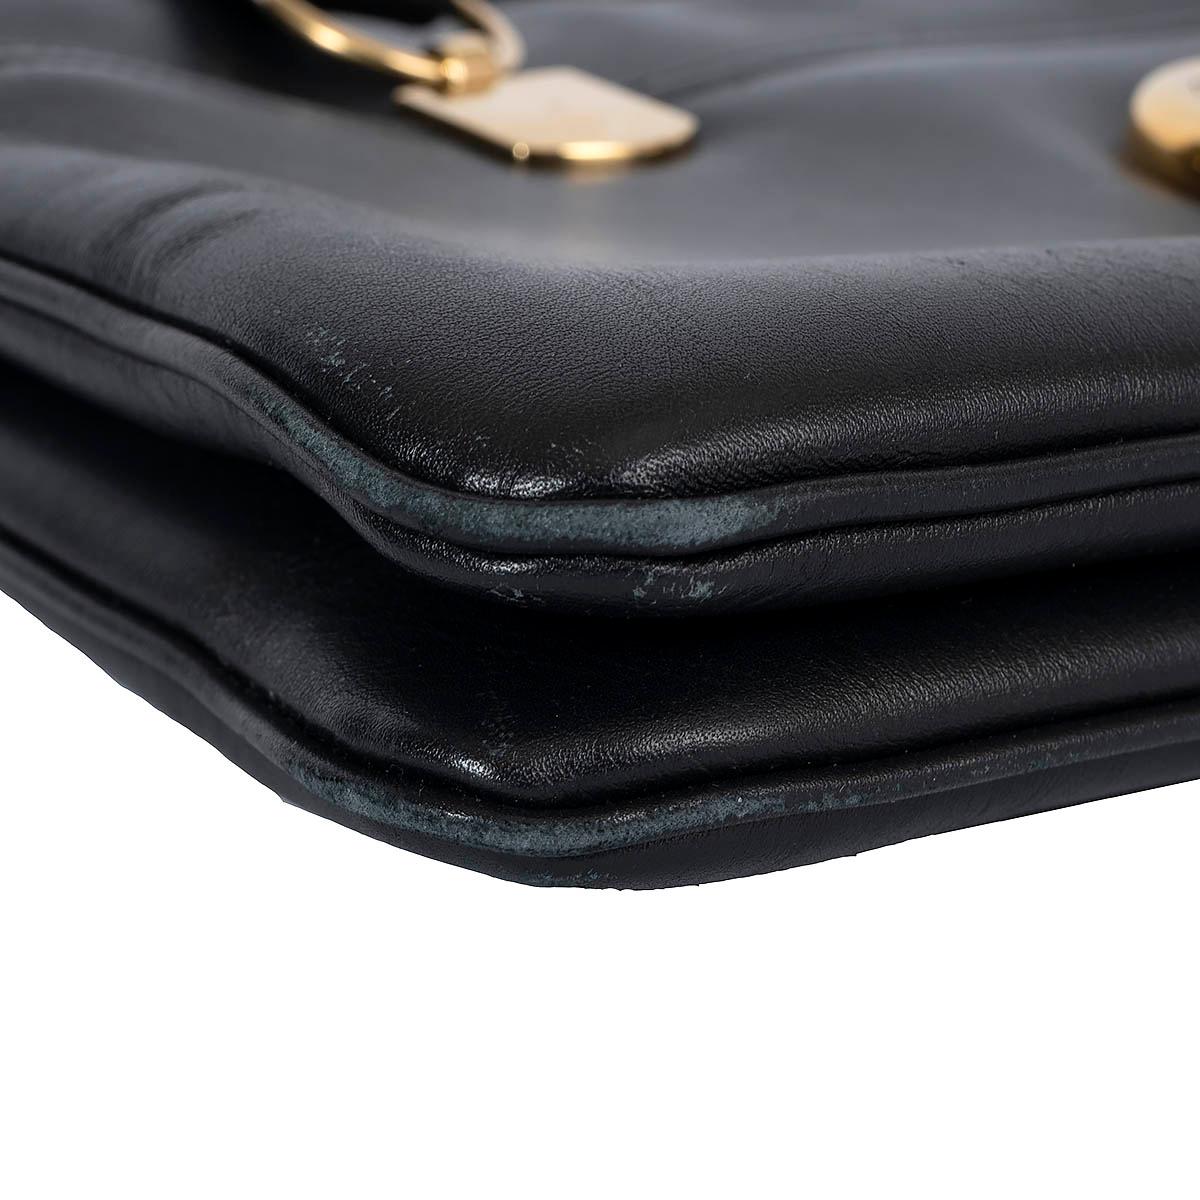 GUCCI cuir noir 2019 ARLI LARGE TOP HANDLE Bag en vente 7